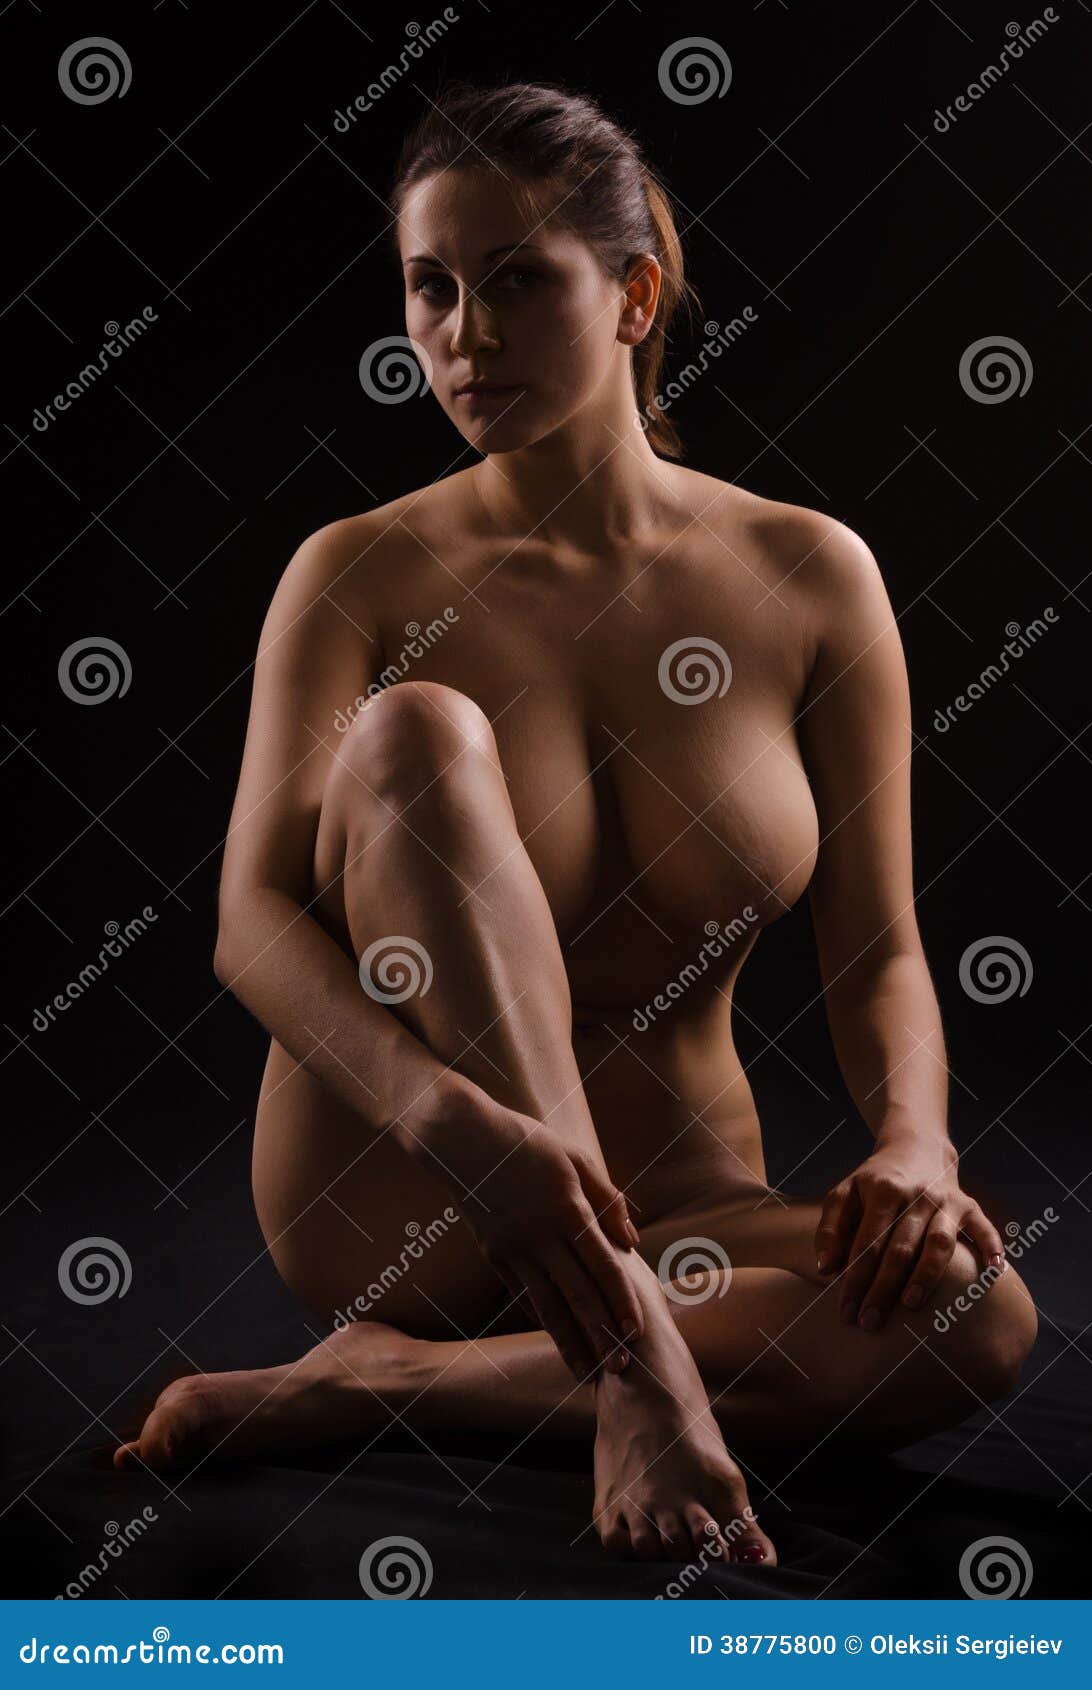 https://thumbs.dreamstime.com/z/figure-naked-woman-silhouette-nude-female-black-background-38775800.jpg